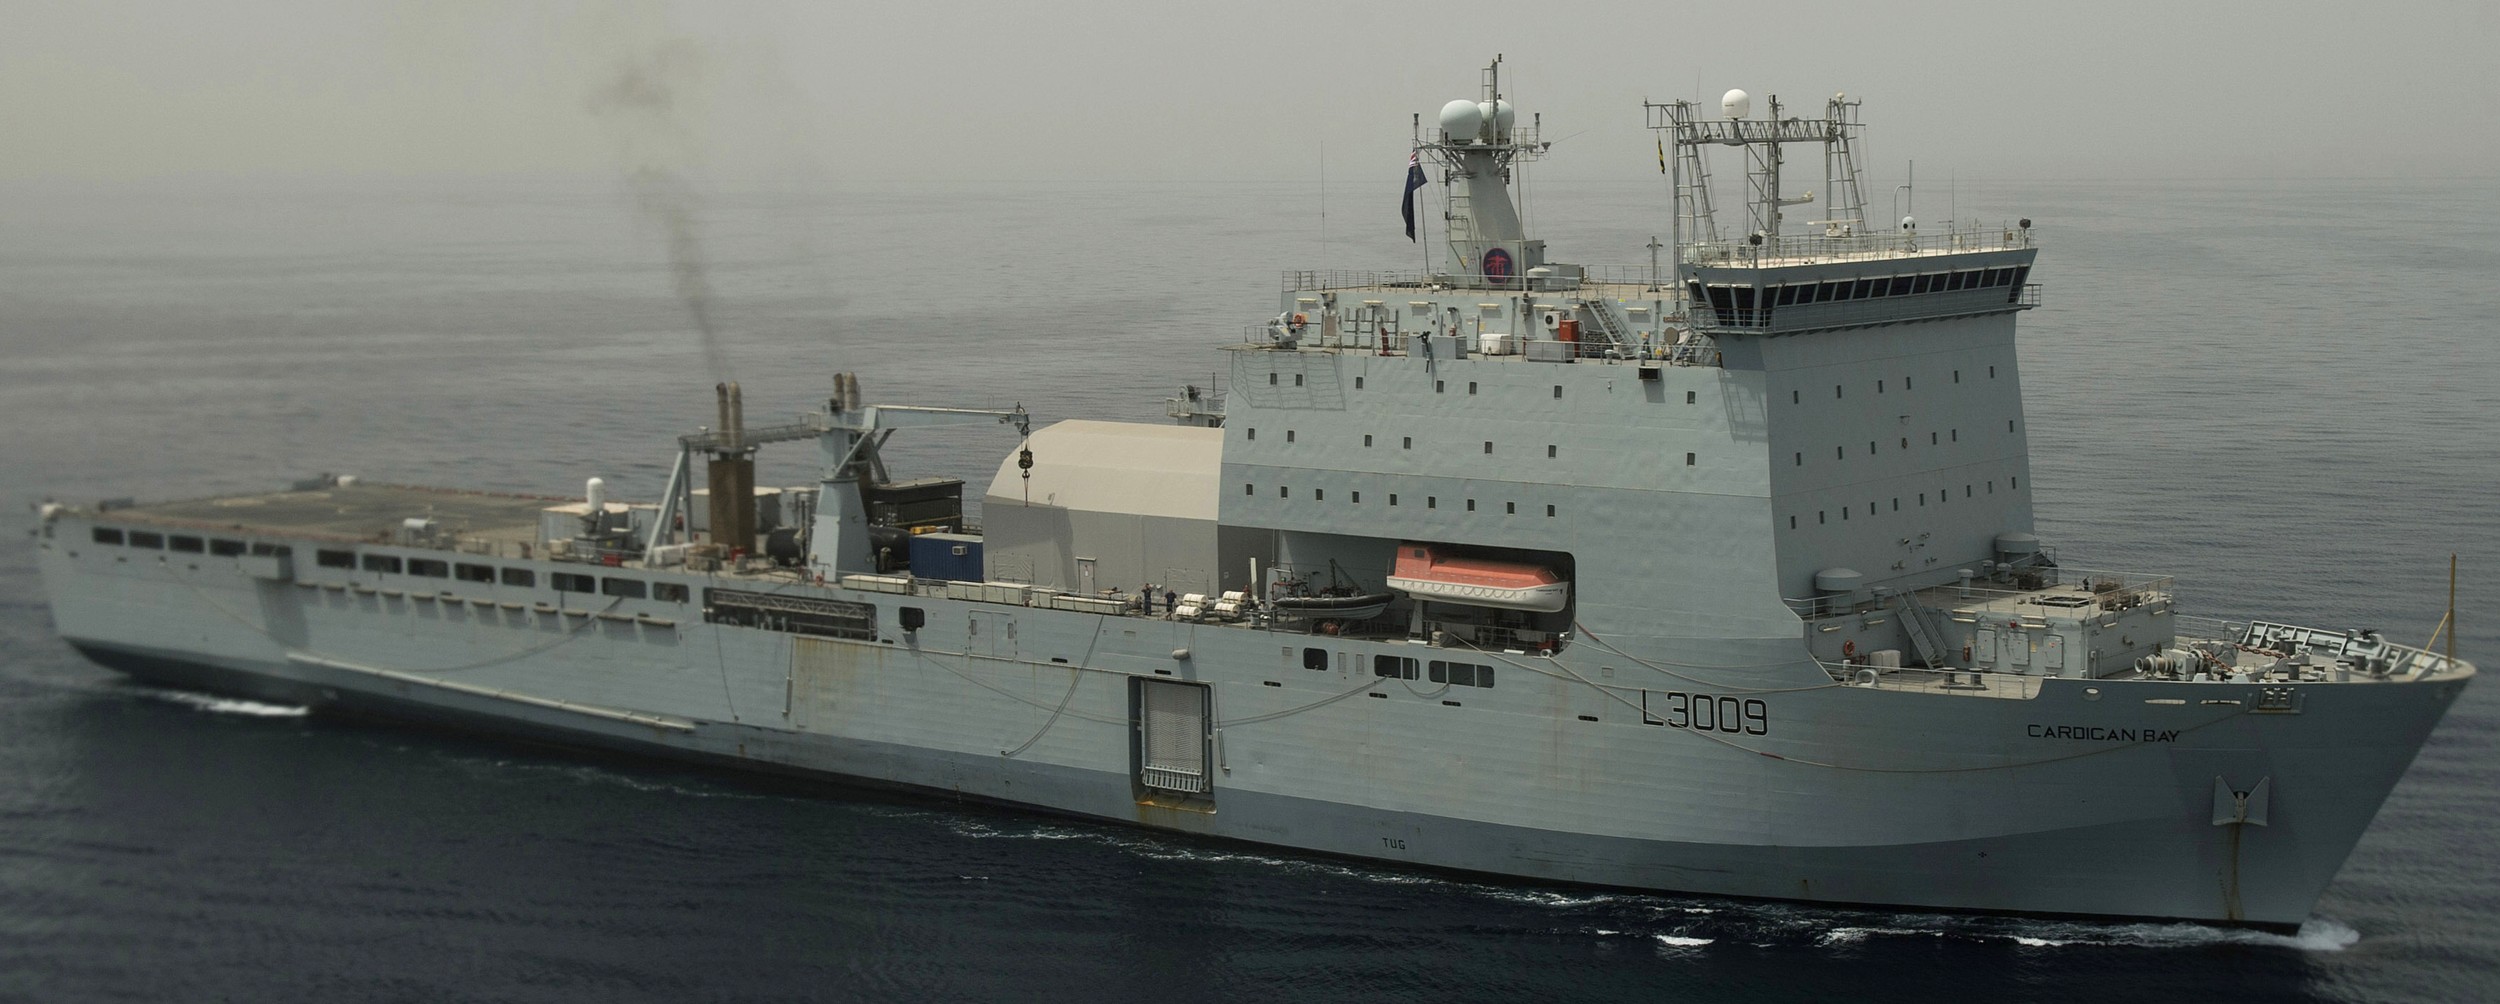 rfa cardigan bay l-3009 class dock landing ship lsd amphibious royal fleet auxilary navy